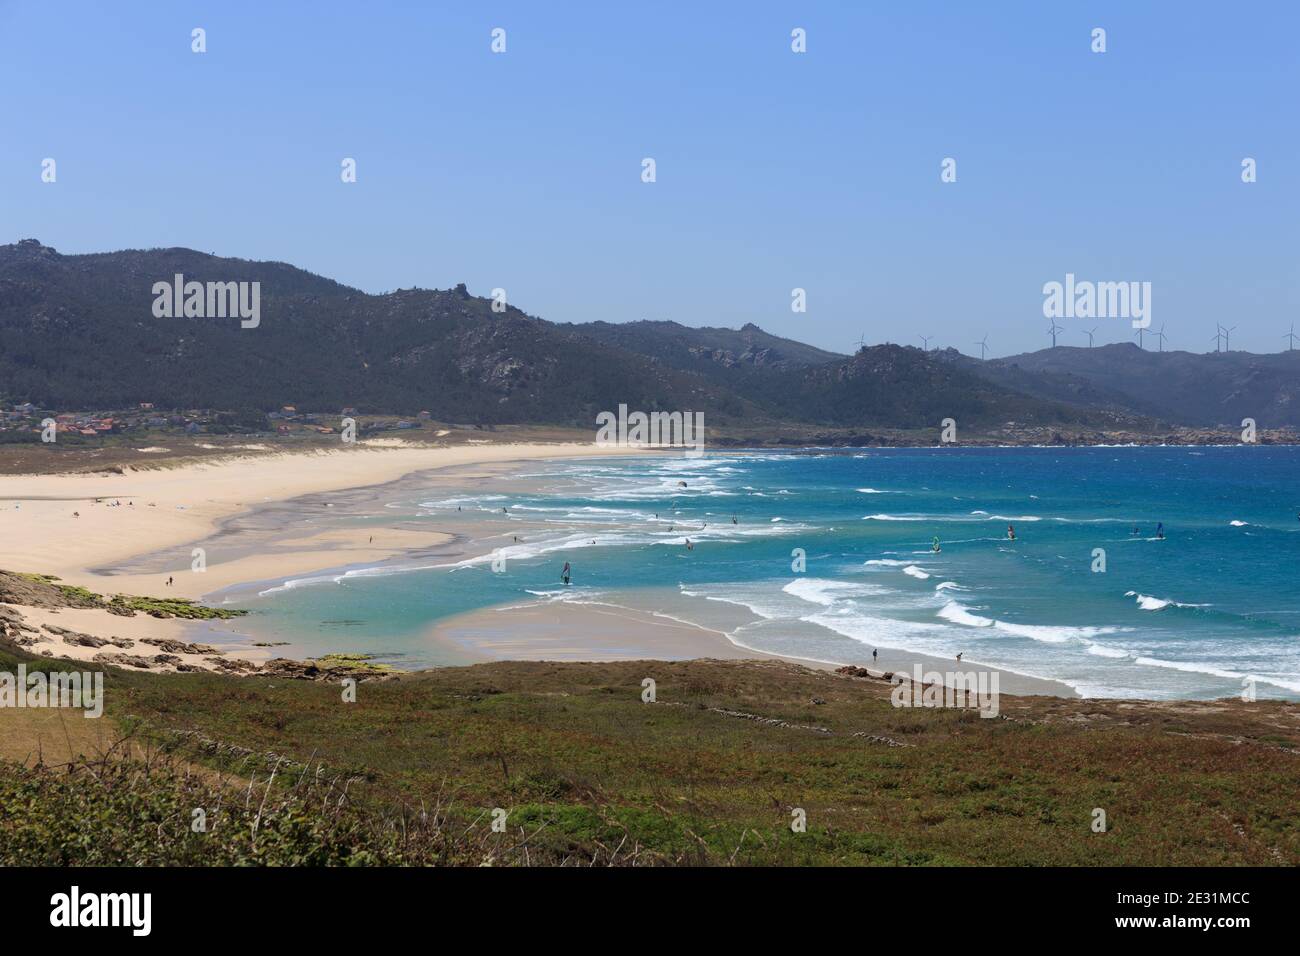 Spiaggia di Soesto (Praia de Soesto), la via faro da Laxe ad Alou, Galizia, la Coruña, Spagna Foto Stock